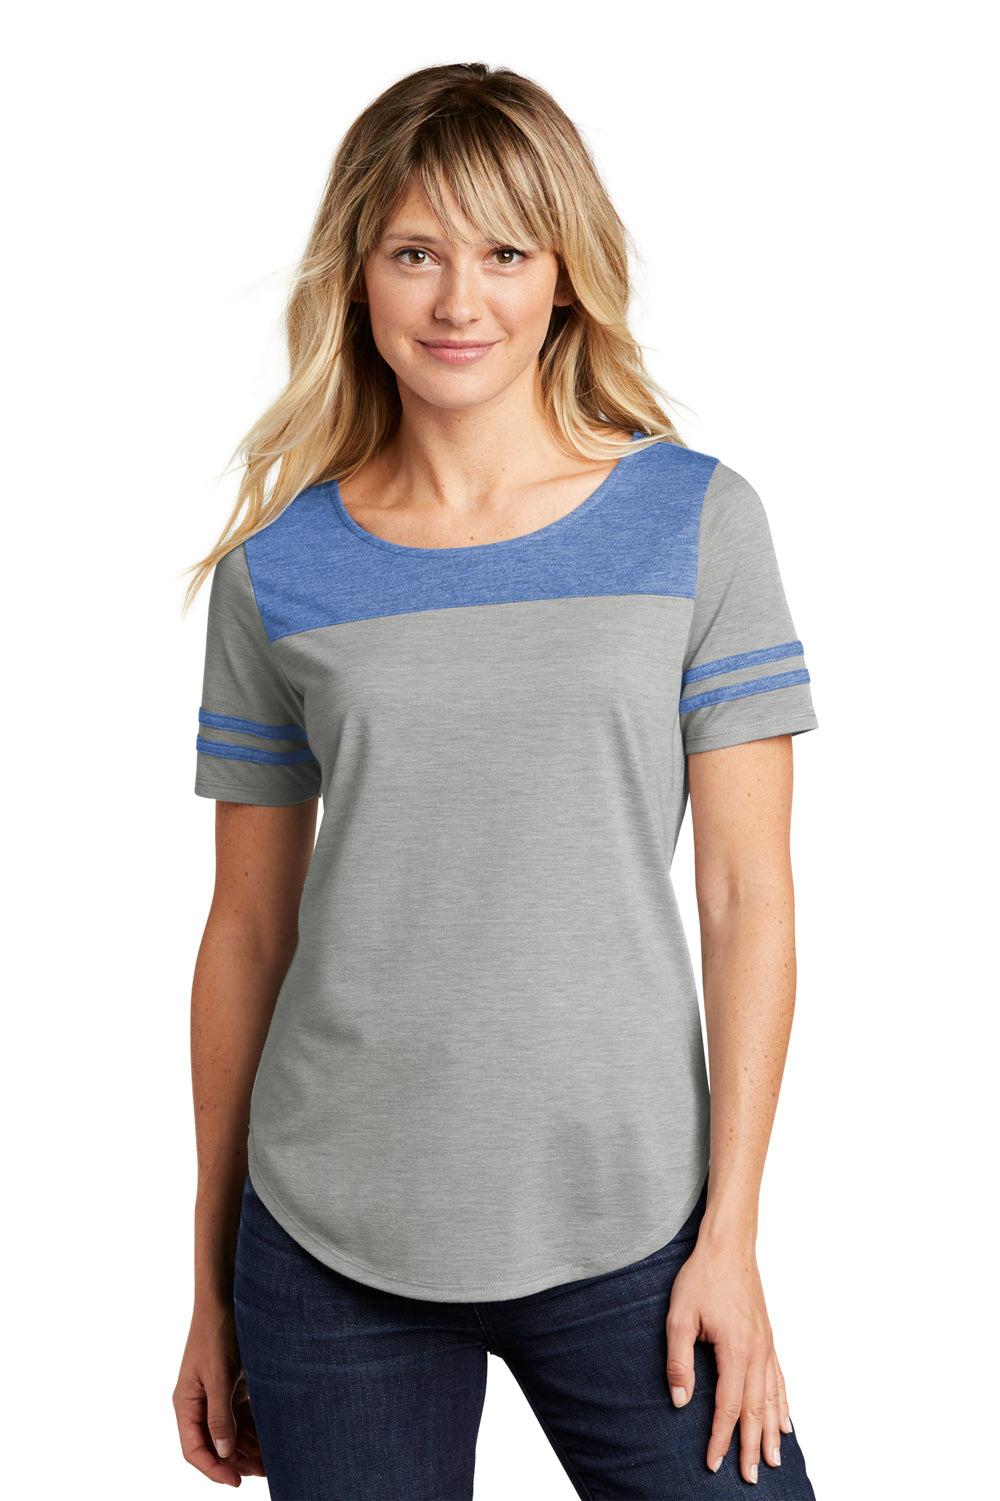 Sport-Tek Womens Fan Moisture Wicking Short Sleeve Crewneck T-Shirt Heather True Royal Blue/Heather Light Grey Front